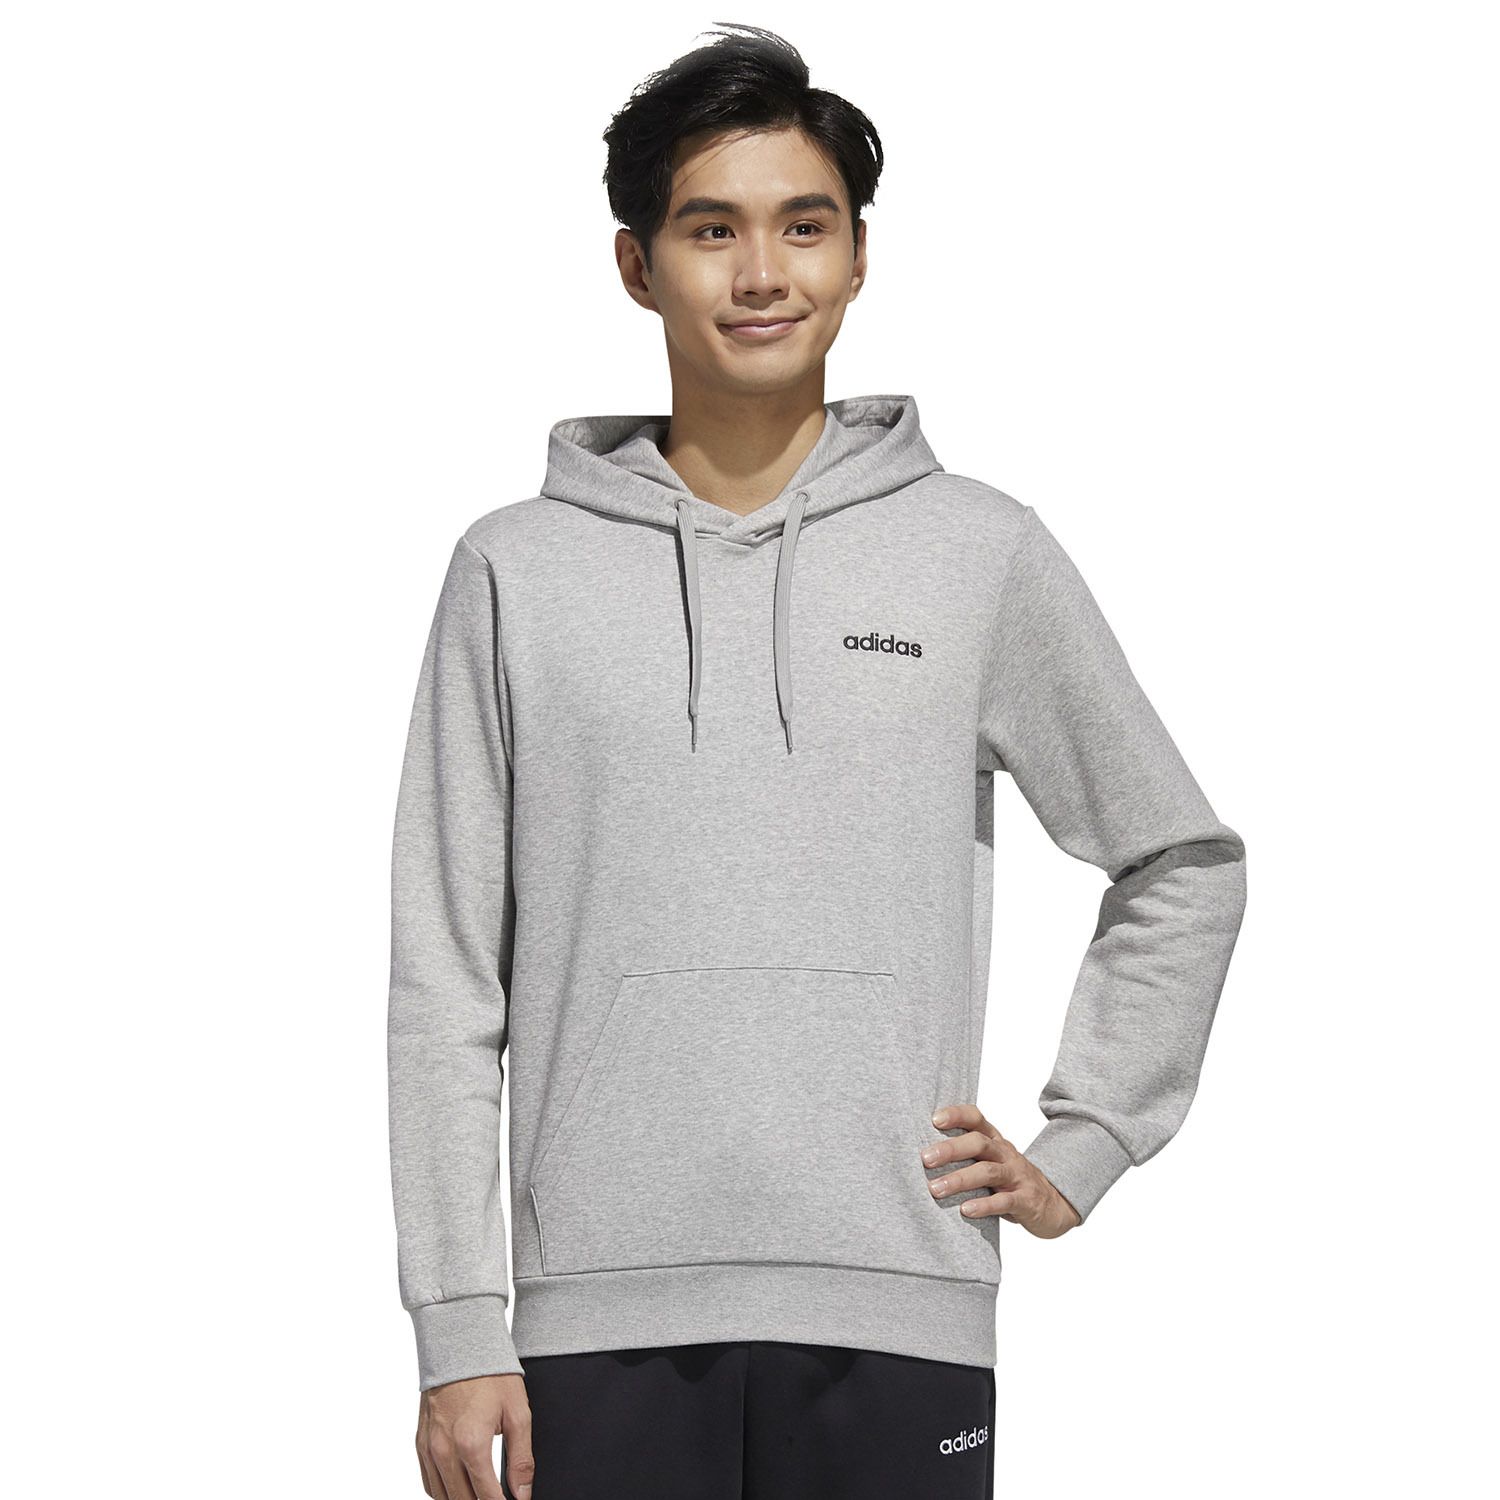 men's gray adidas hoodie